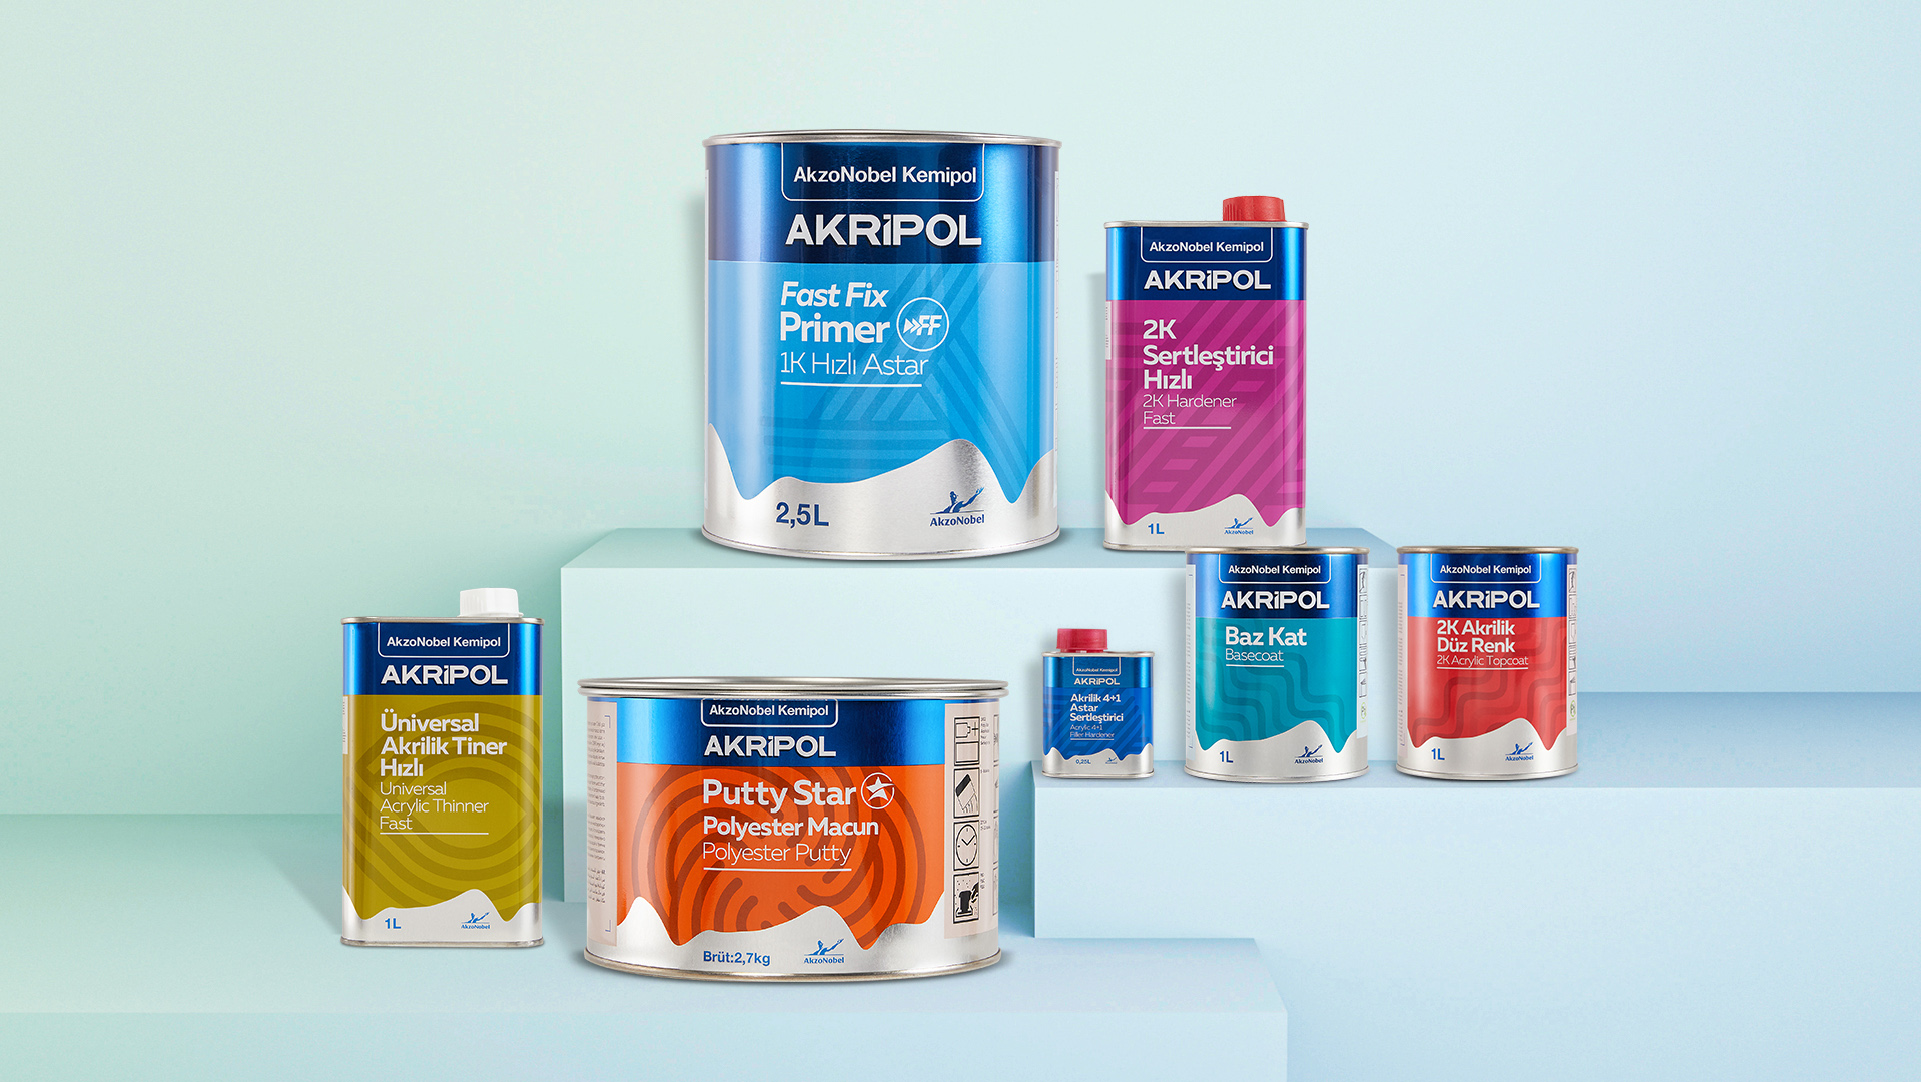 Packaging Design for Akripol by Talking Packs